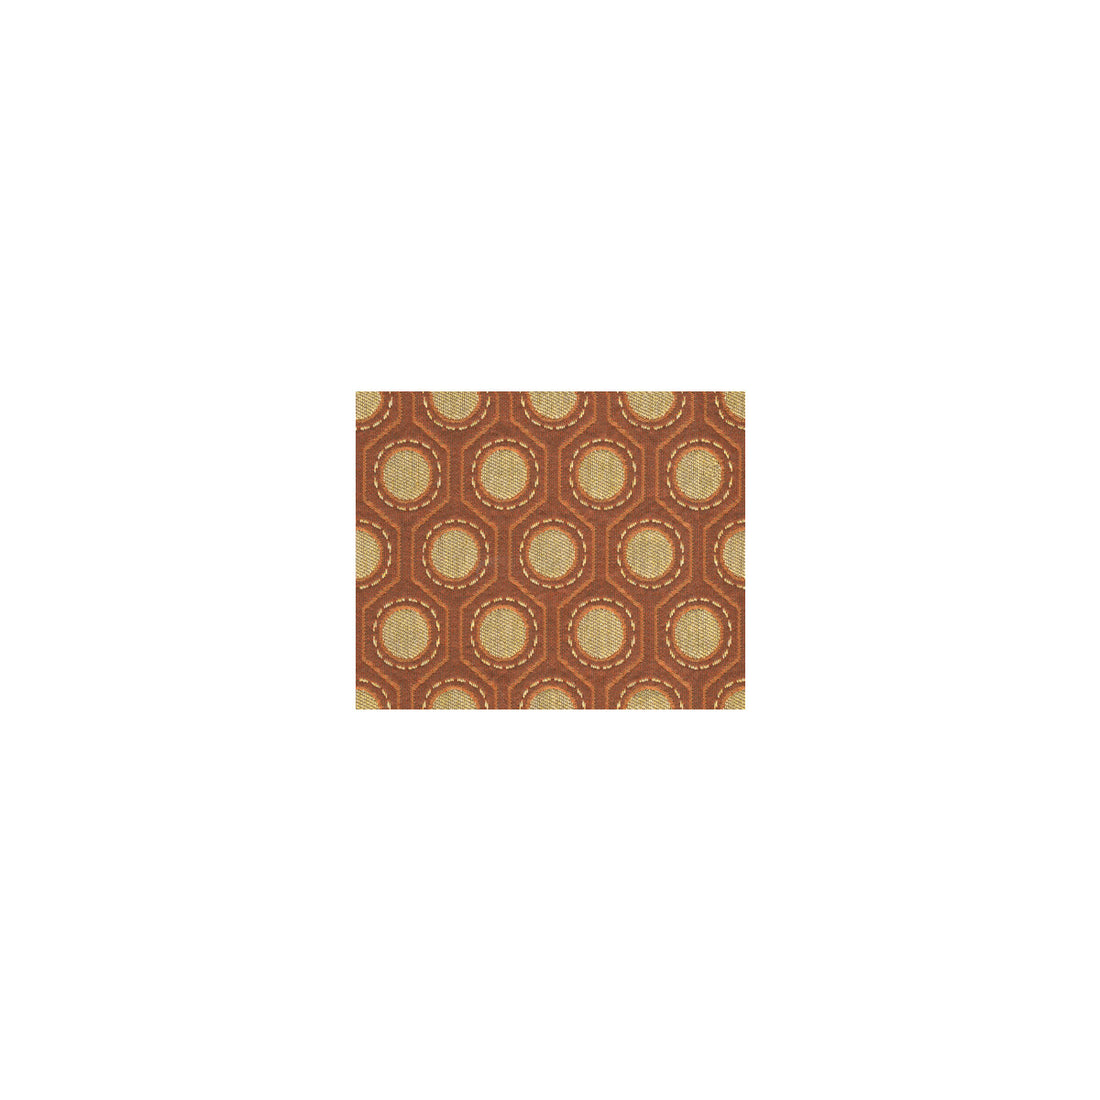 Kravet Smart fabric in 30635-412 color - pattern 30635.412.0 - by Kravet Smart